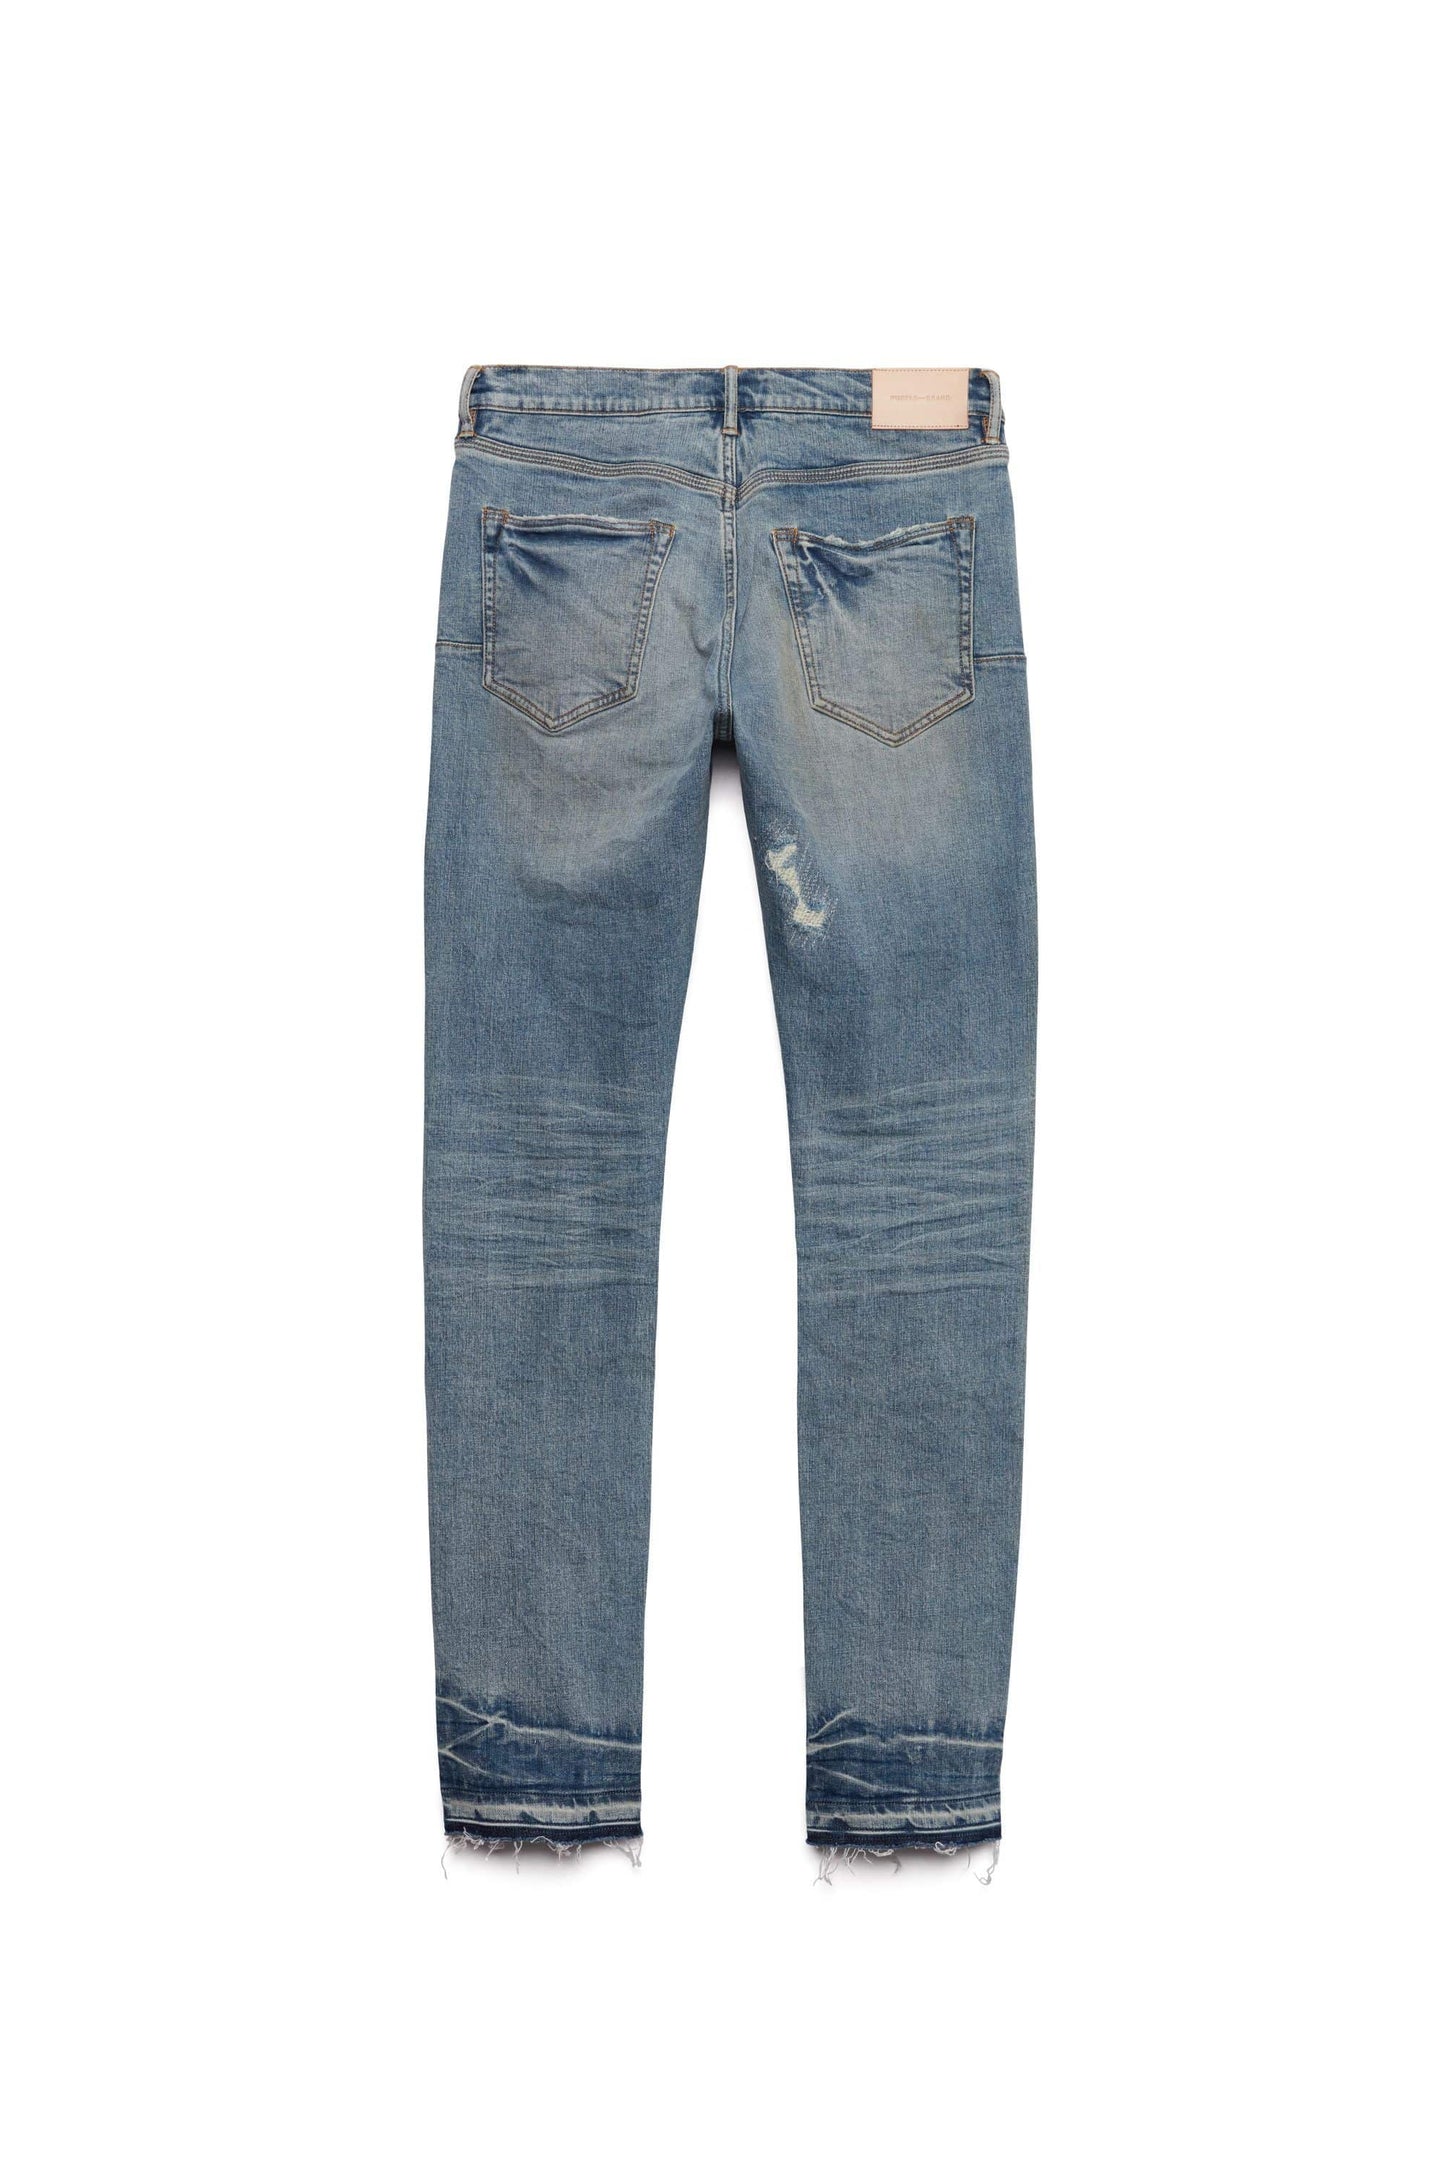 PURPLE BRAND - Men's Denim Jean - Low Rise Skinny - Style No. P001 - Light Indigo Vintage - Back